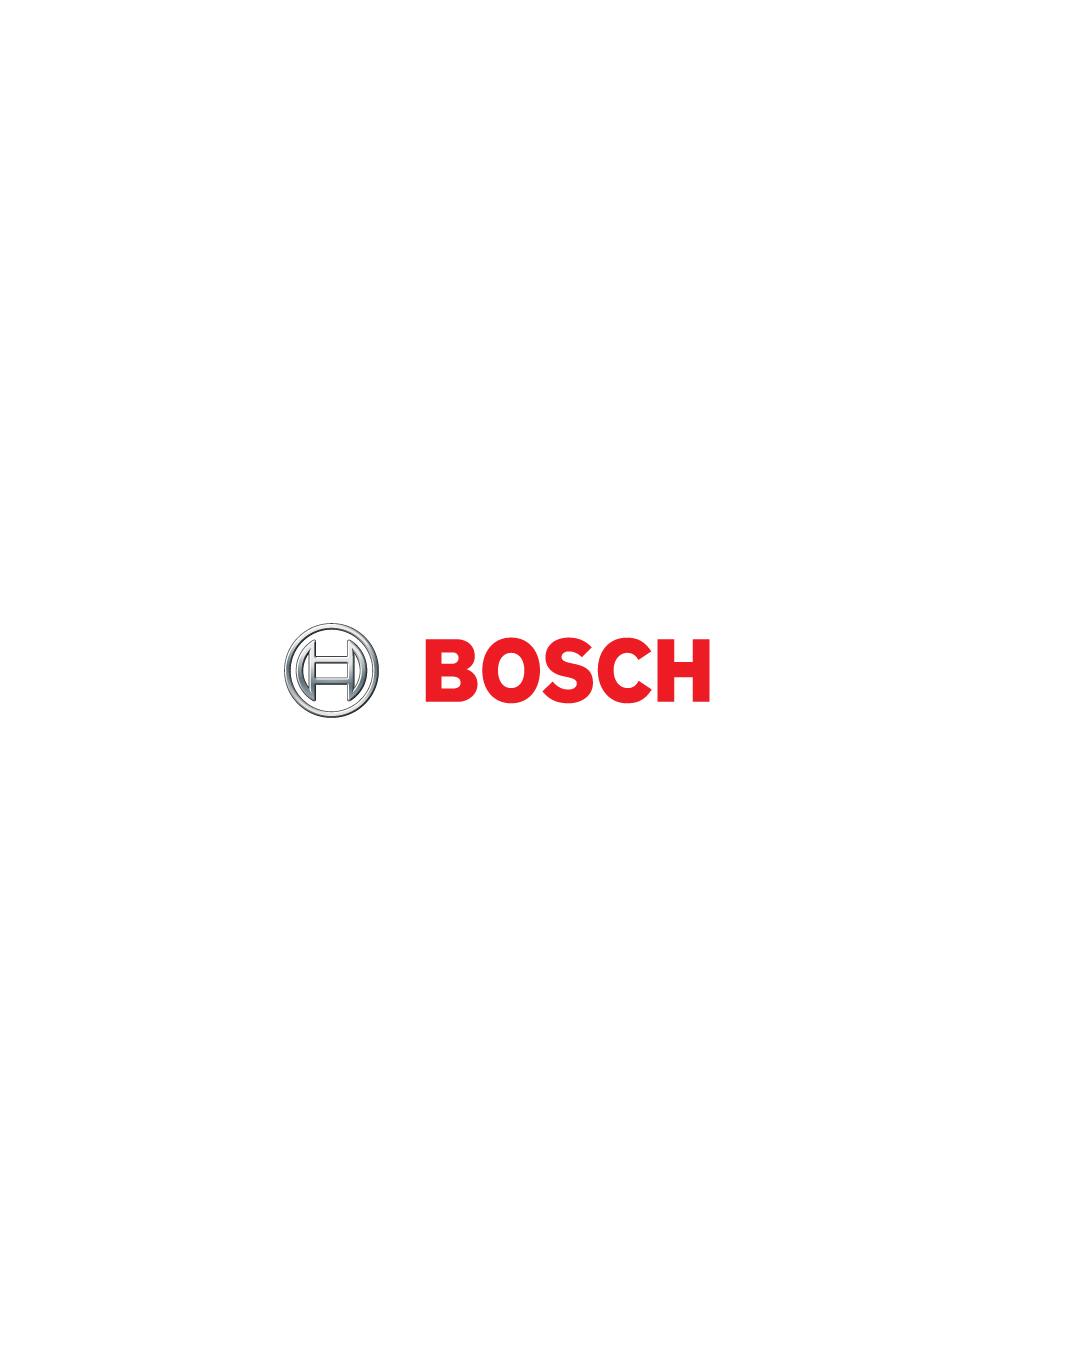 Bosch Image